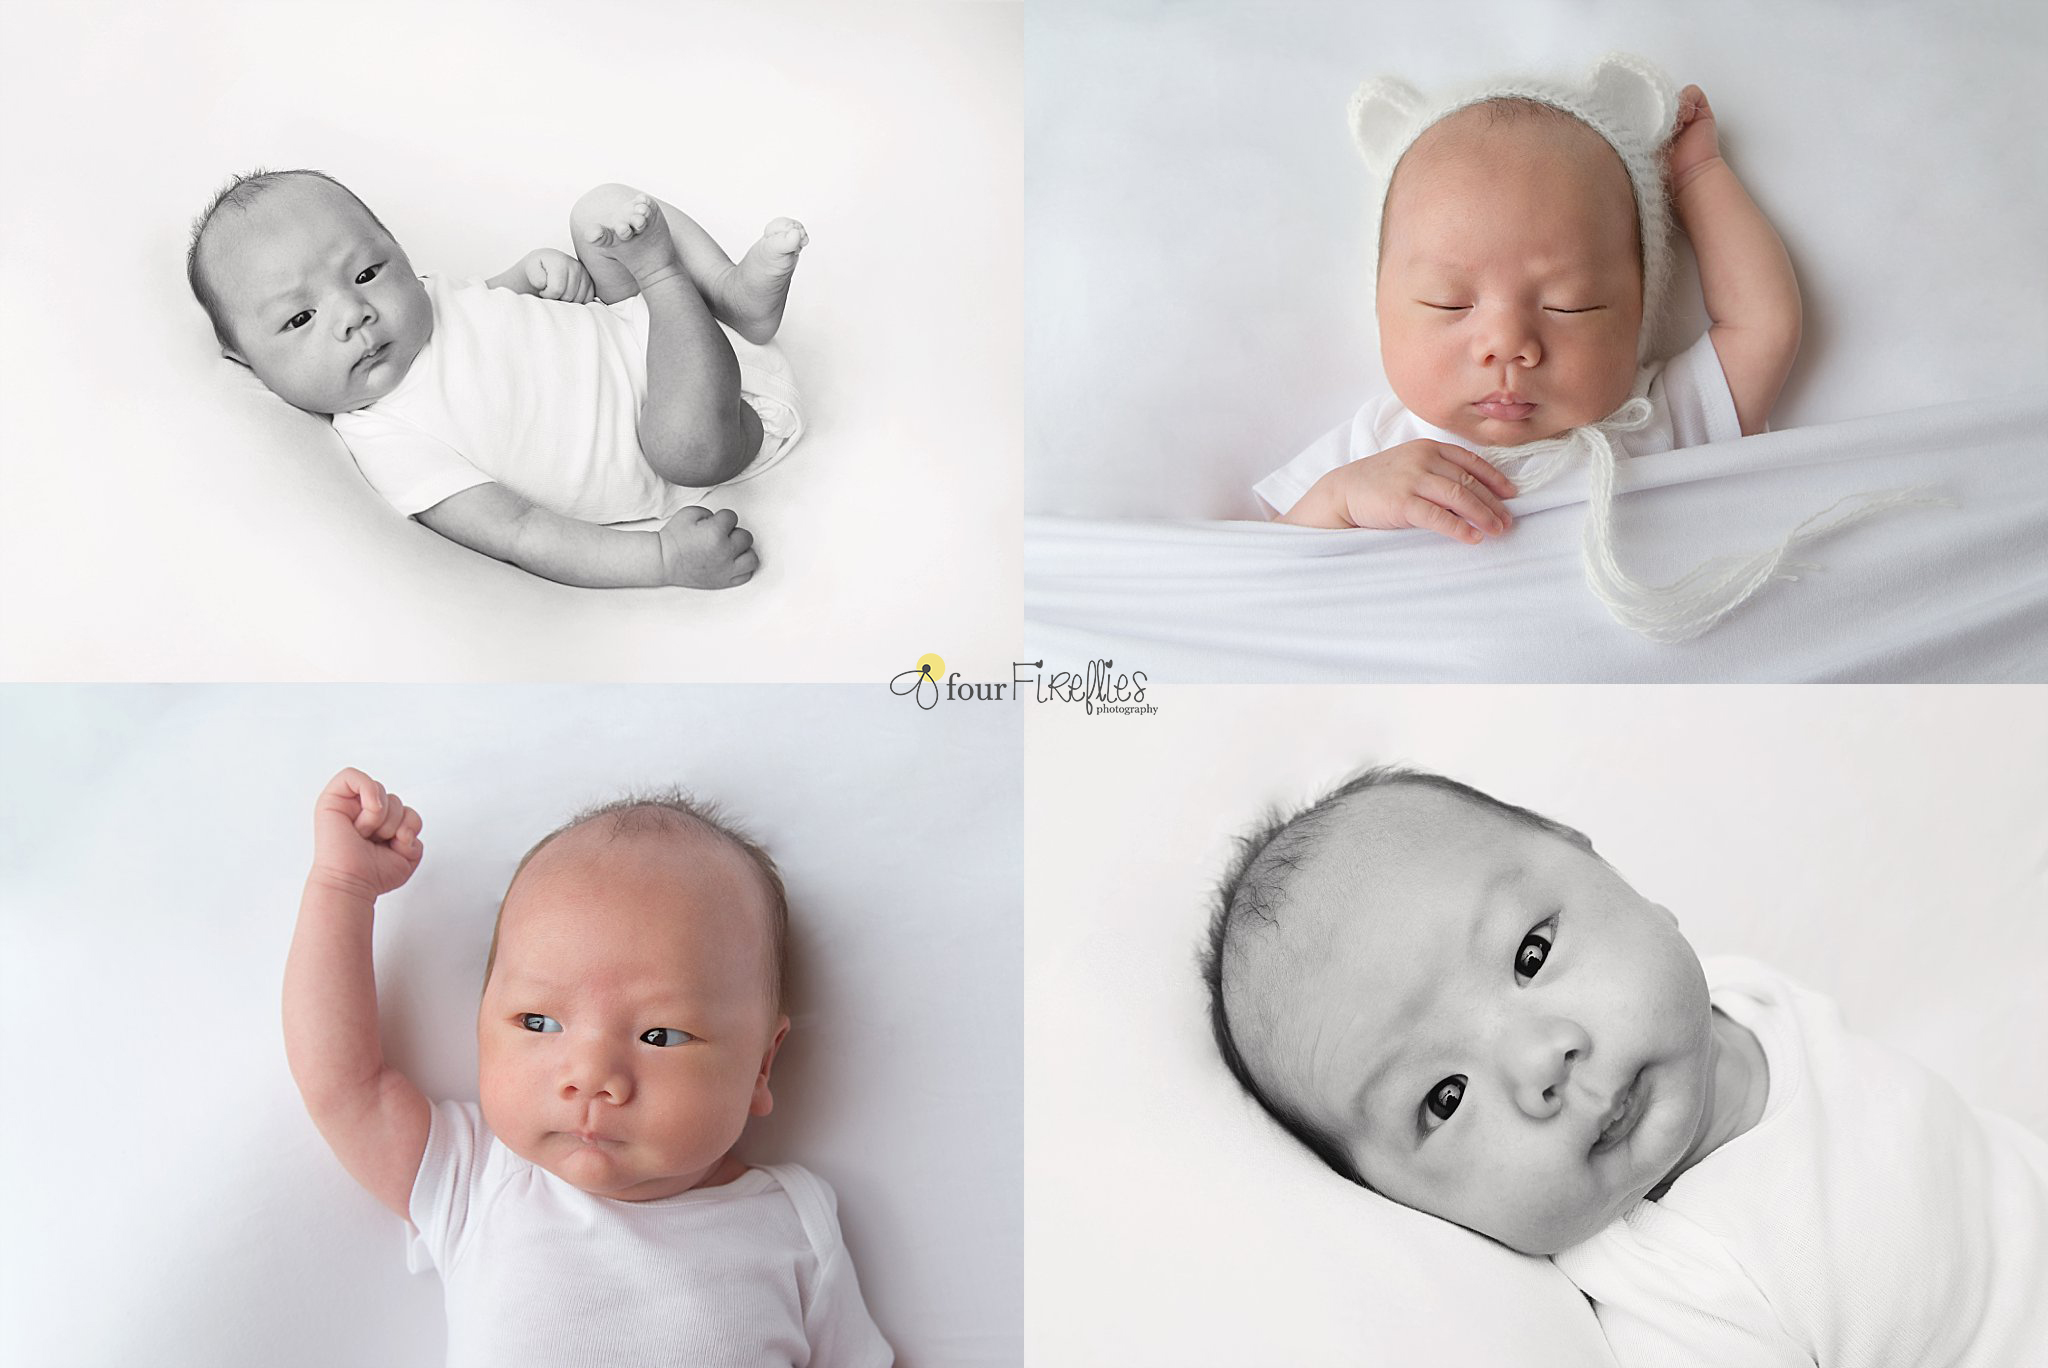 st-louis-newborn-photographer-collage-of-awake-baby-in-white-onsie-on-white-backdrop-.jpg